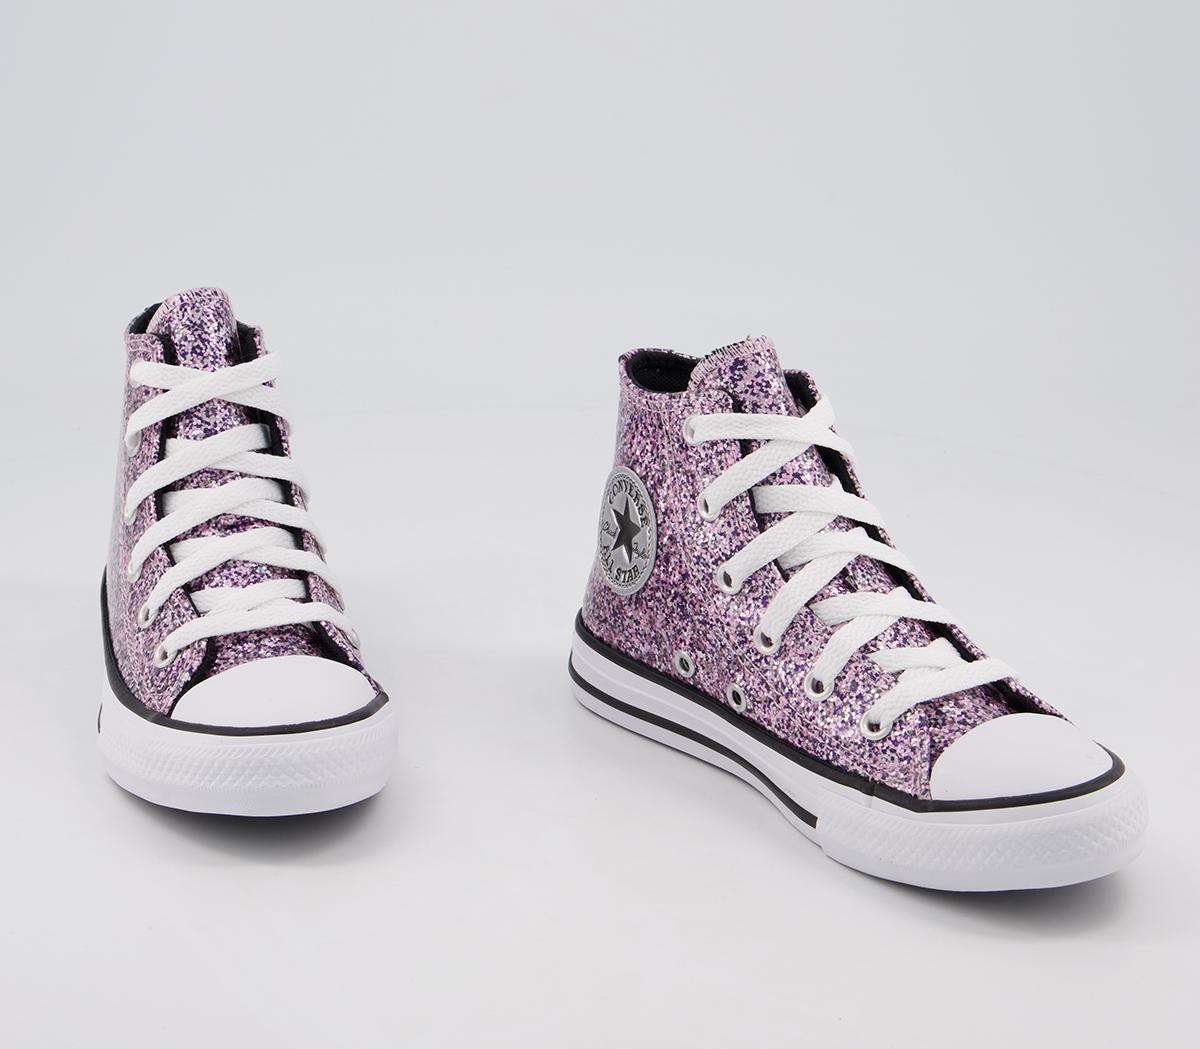 Converse All Star Hi Mid Sizes Trainers Bright Lilac Black Glitter - Unisex